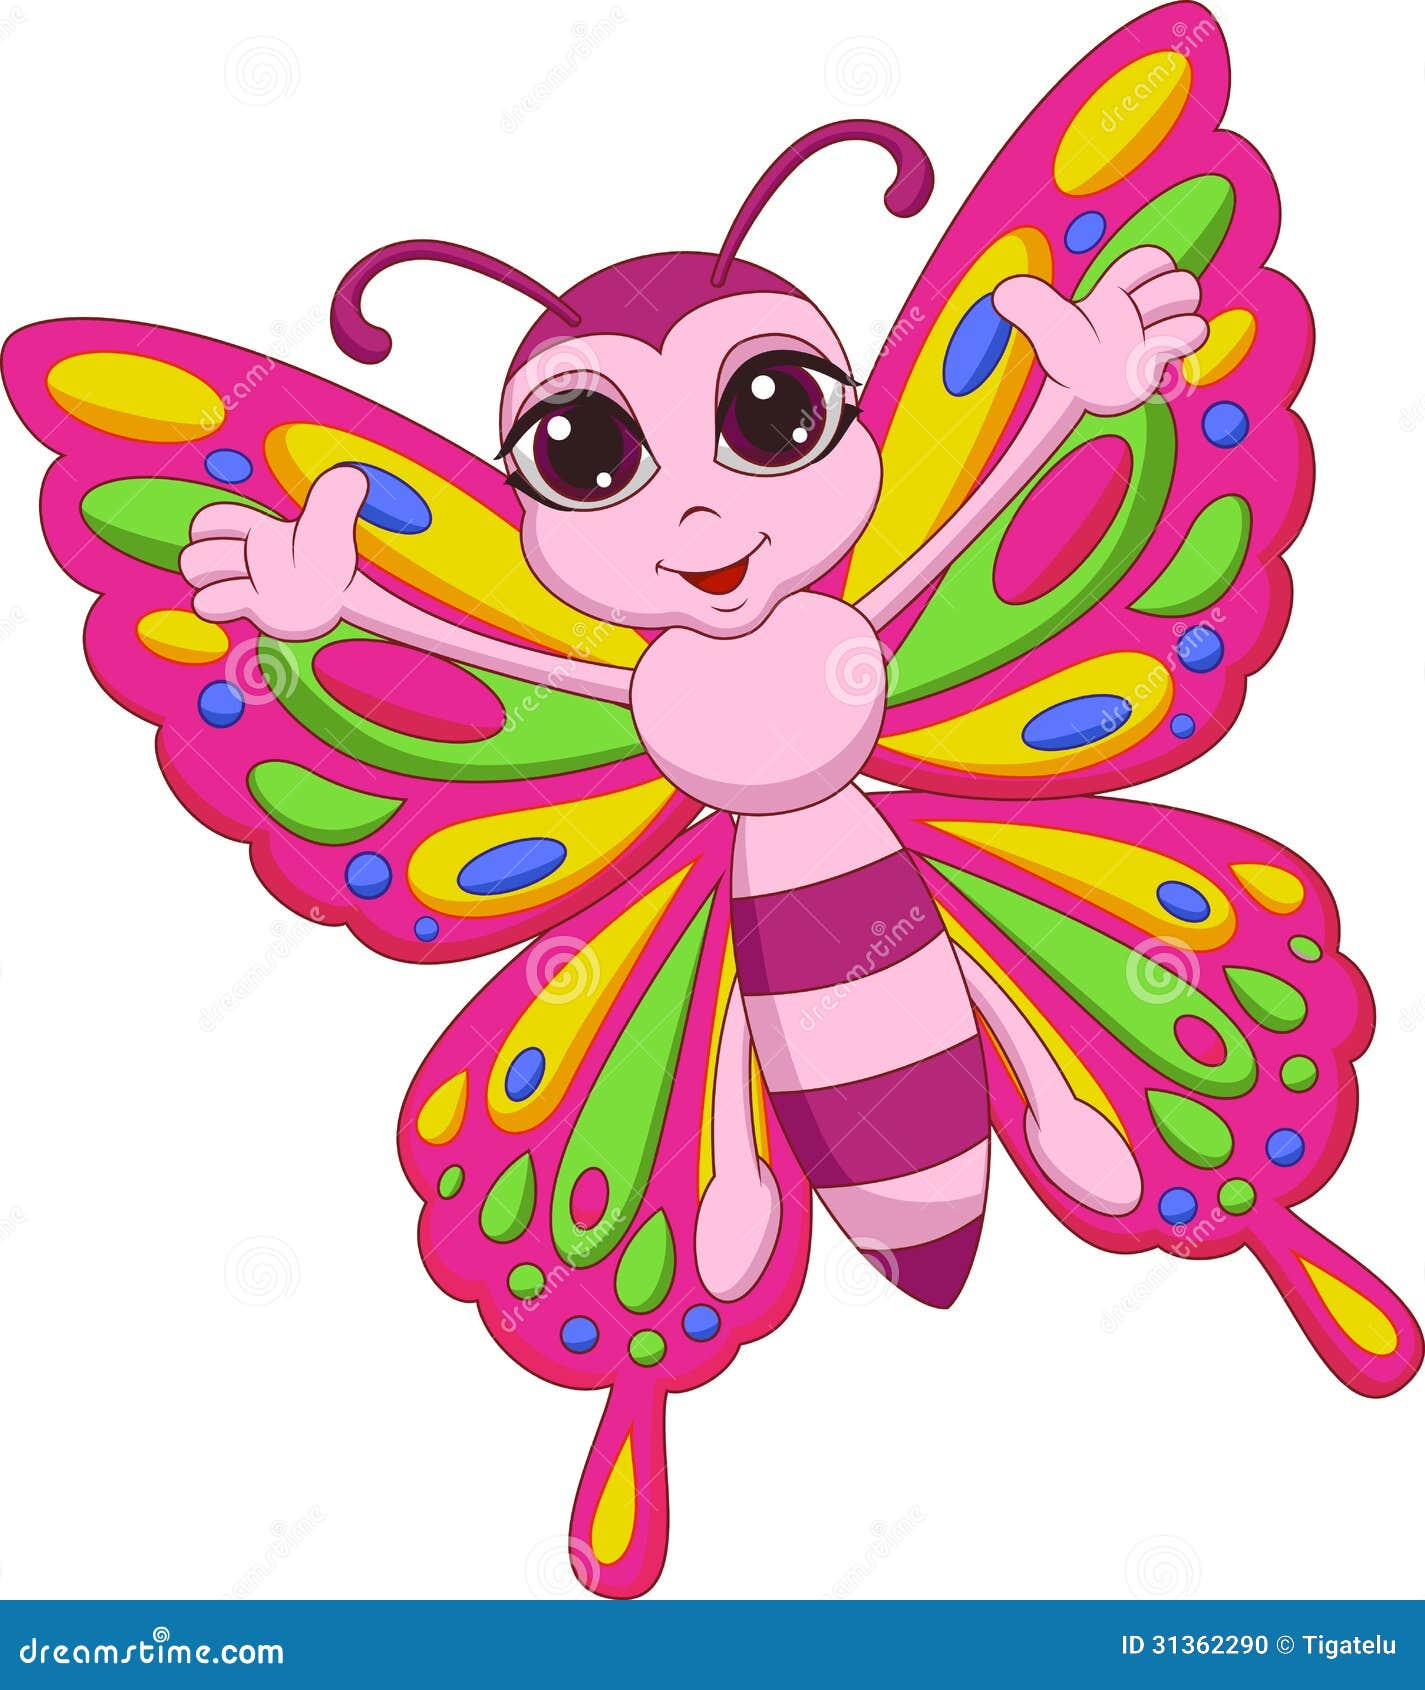 Cute Butterfly Cartoon Stock Photo - Image: 31362290